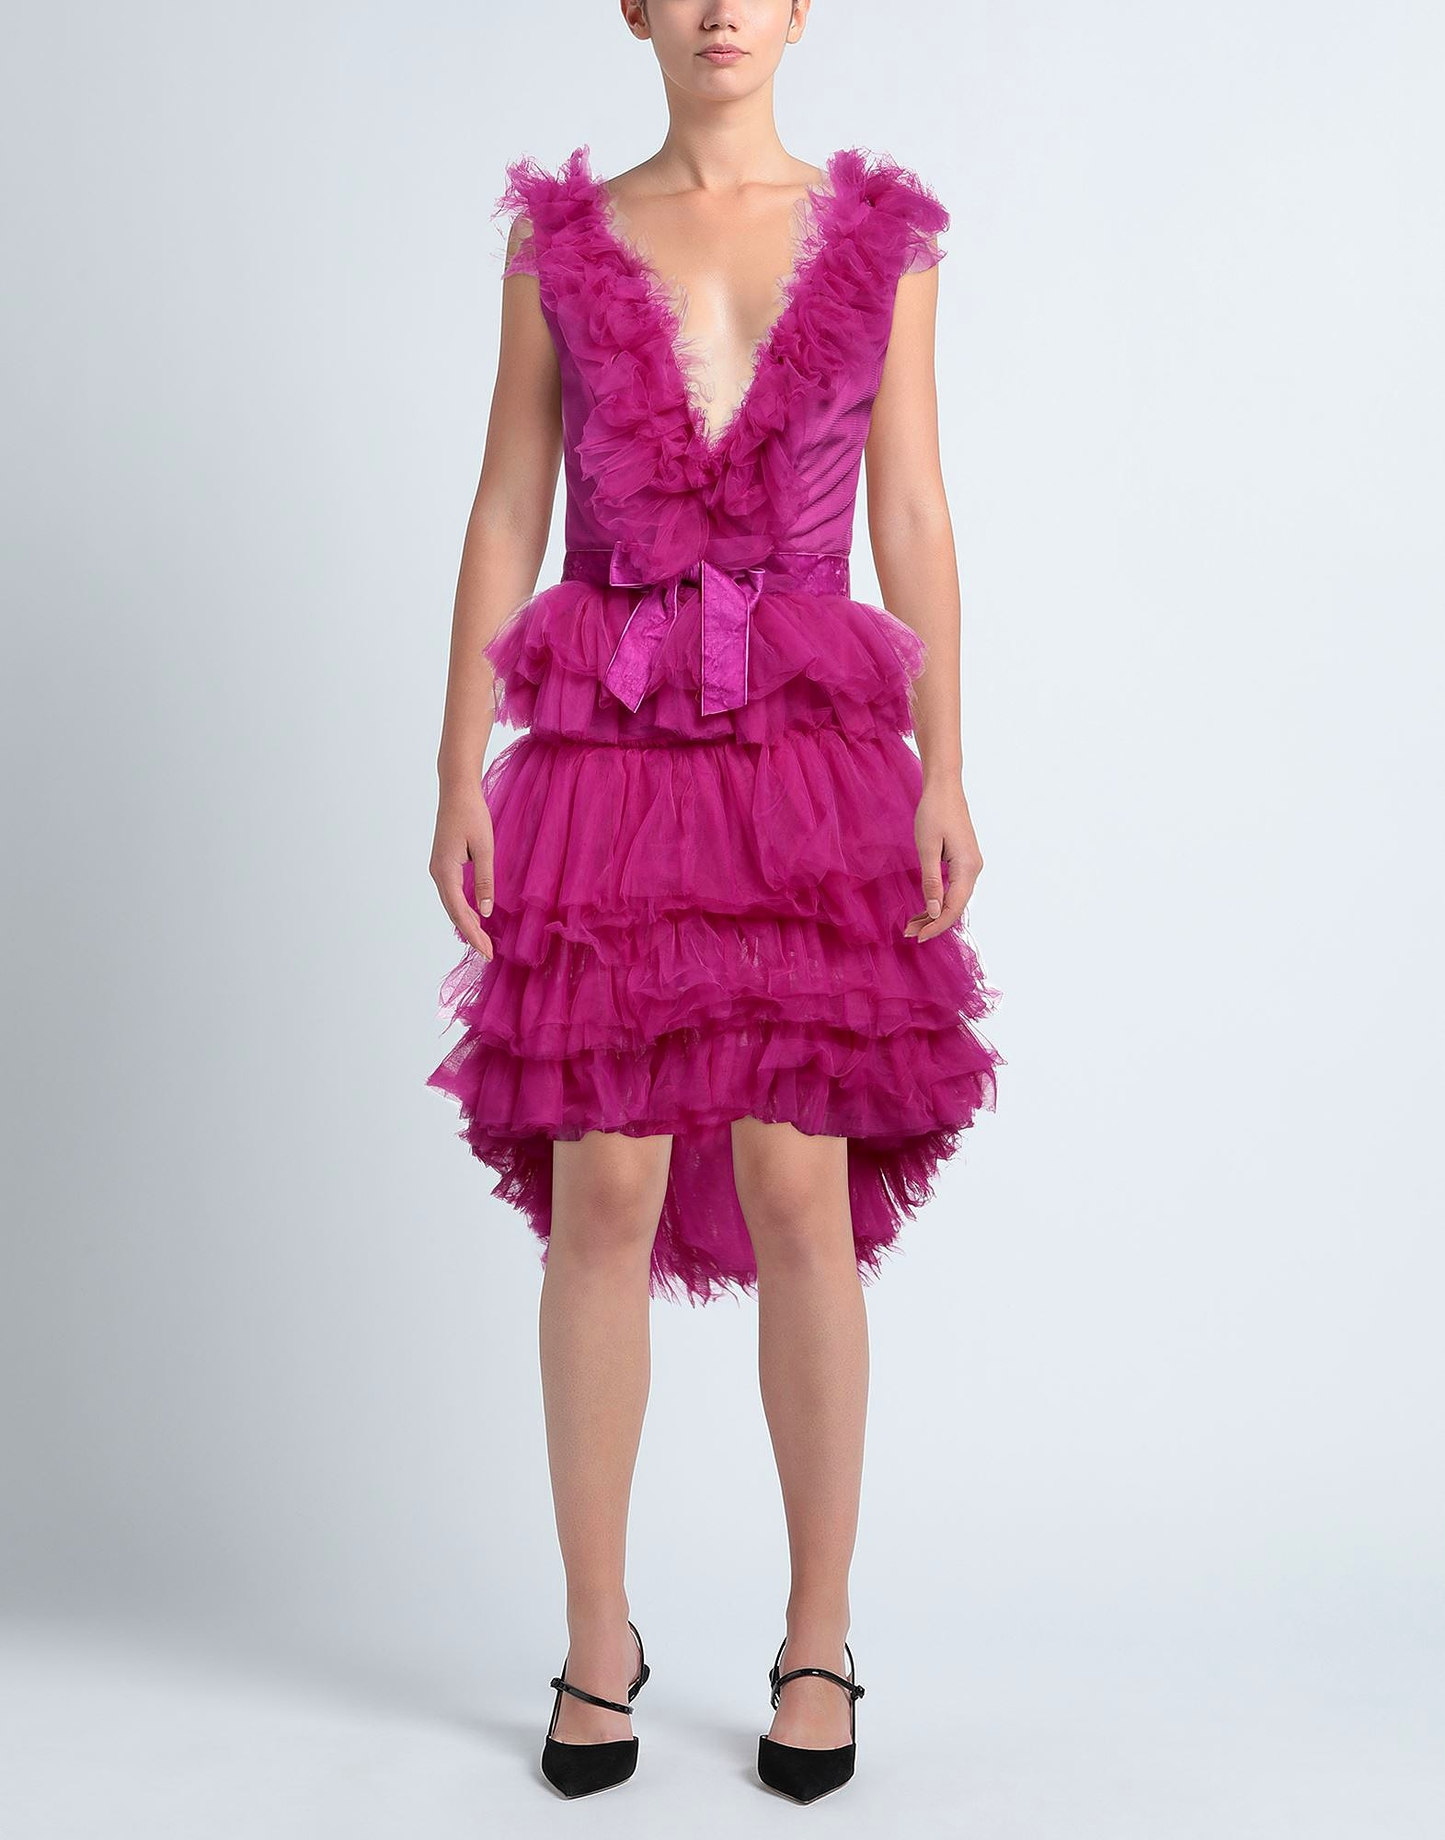 PARIOLI DRESSES - Parioli Short Dress - Fuchsia